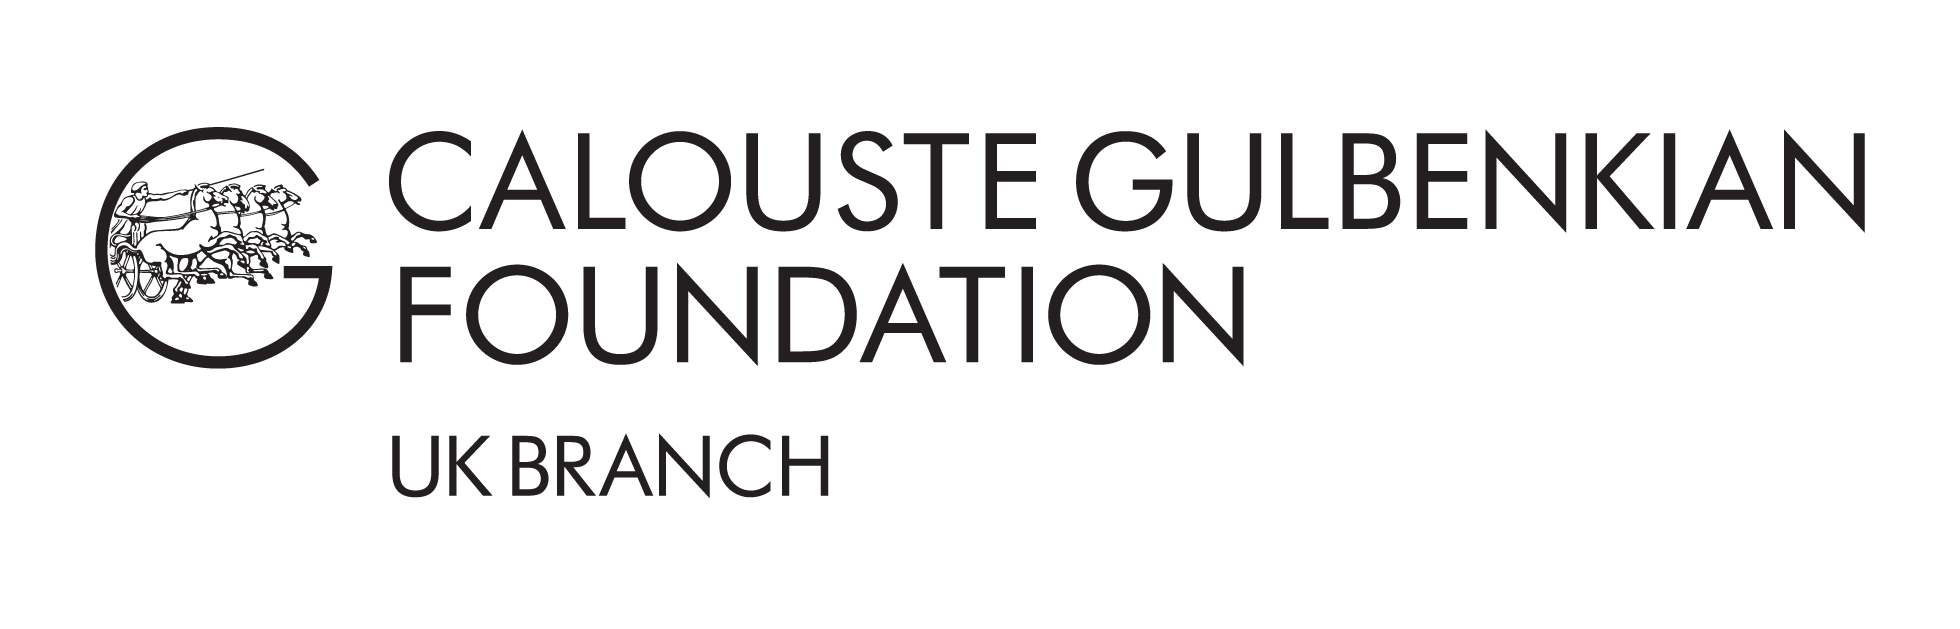 Calouste Gulbenkian Foundation, UK Branch